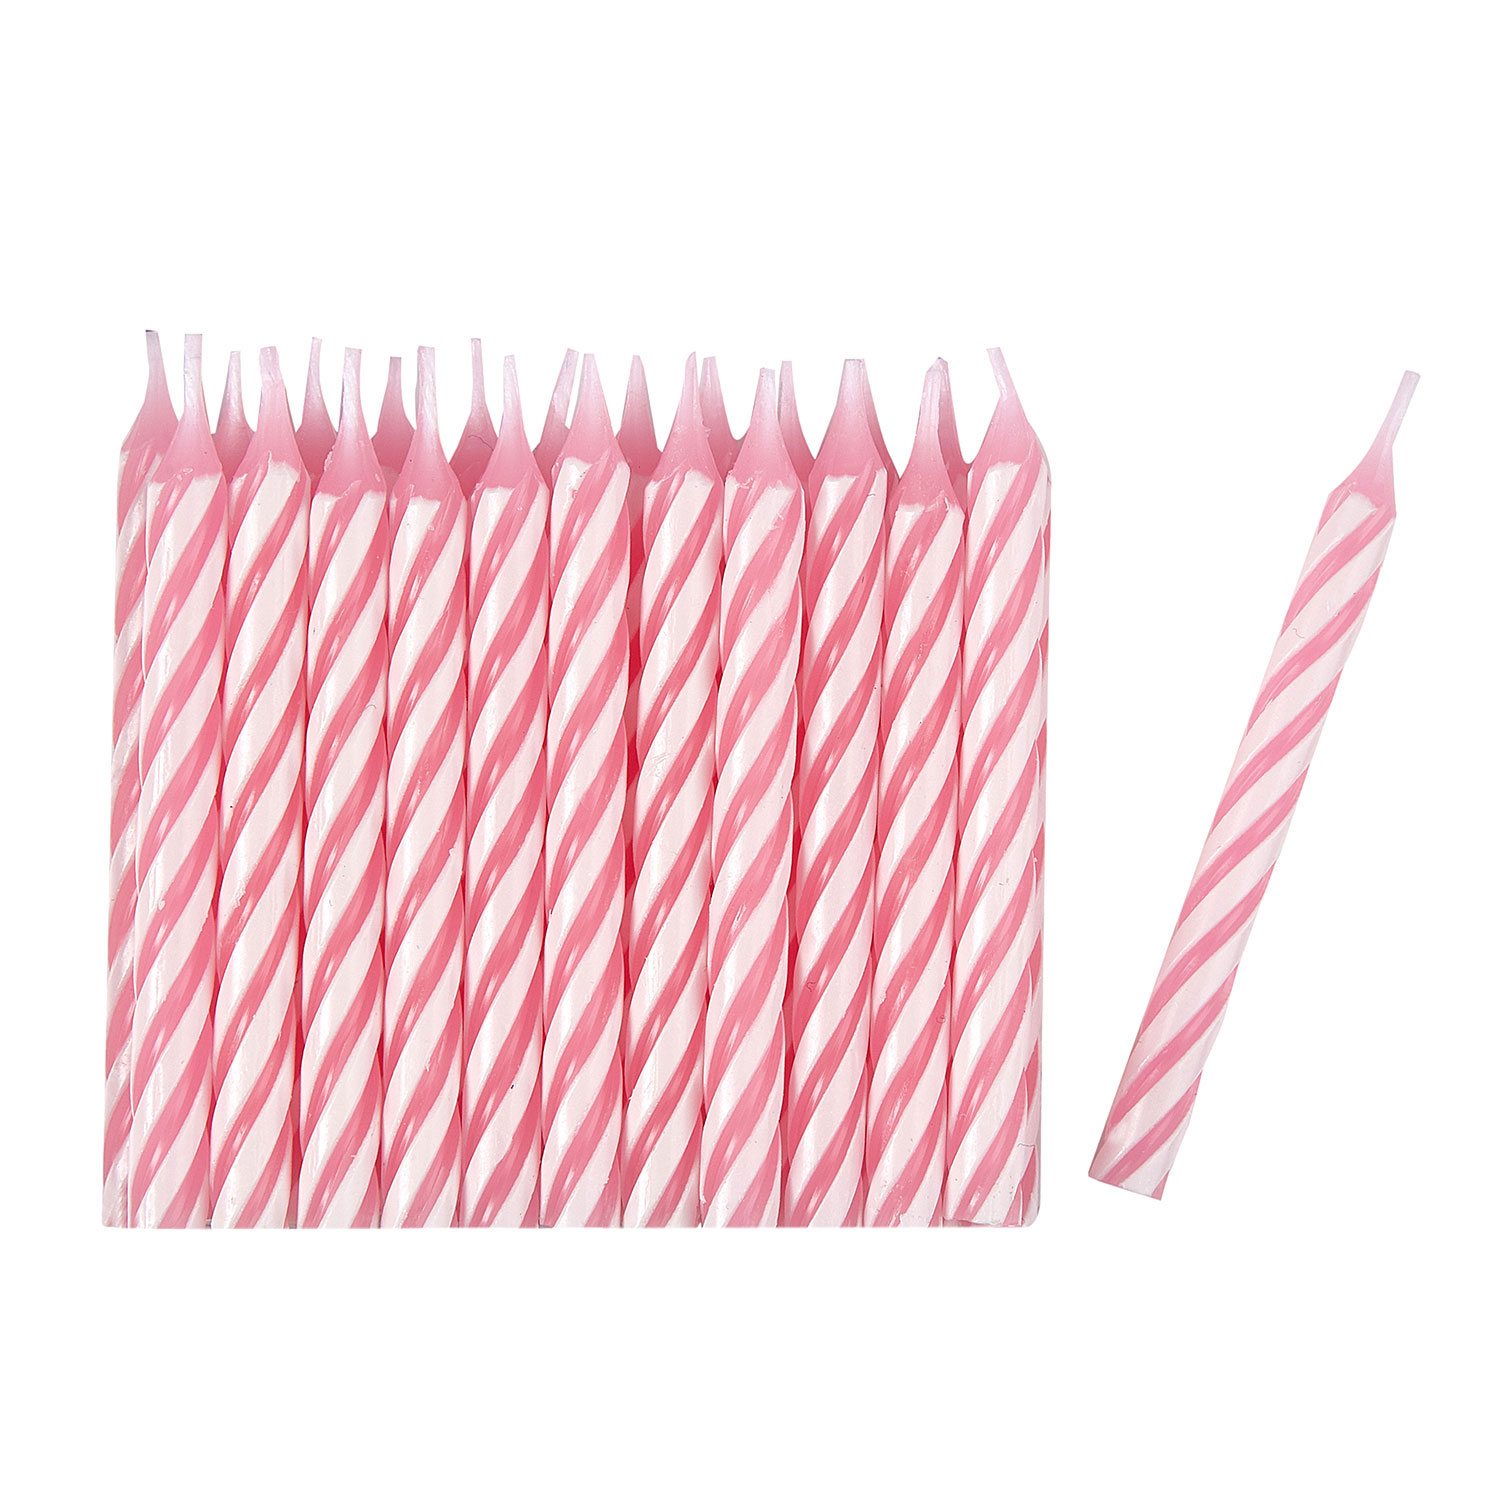 10 Birthday Candles Stripes Pink Mix Amscan 11266 Merchandising Amscan 